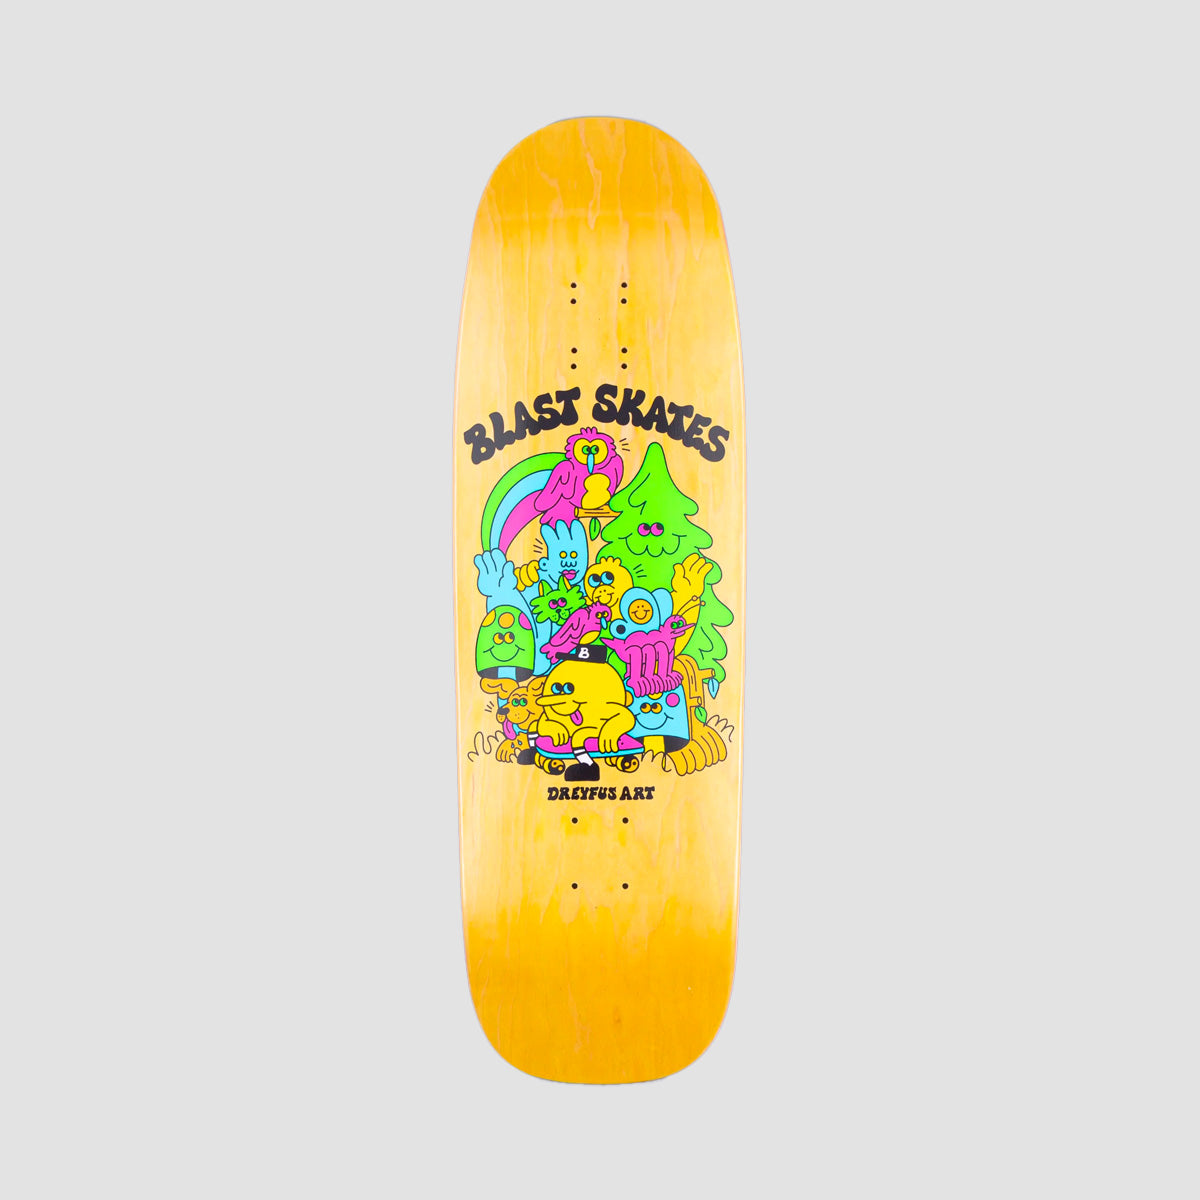 Blast Skates Project 9 Dreyfus Art Custom Shape Skateboard Deck - 9.5"